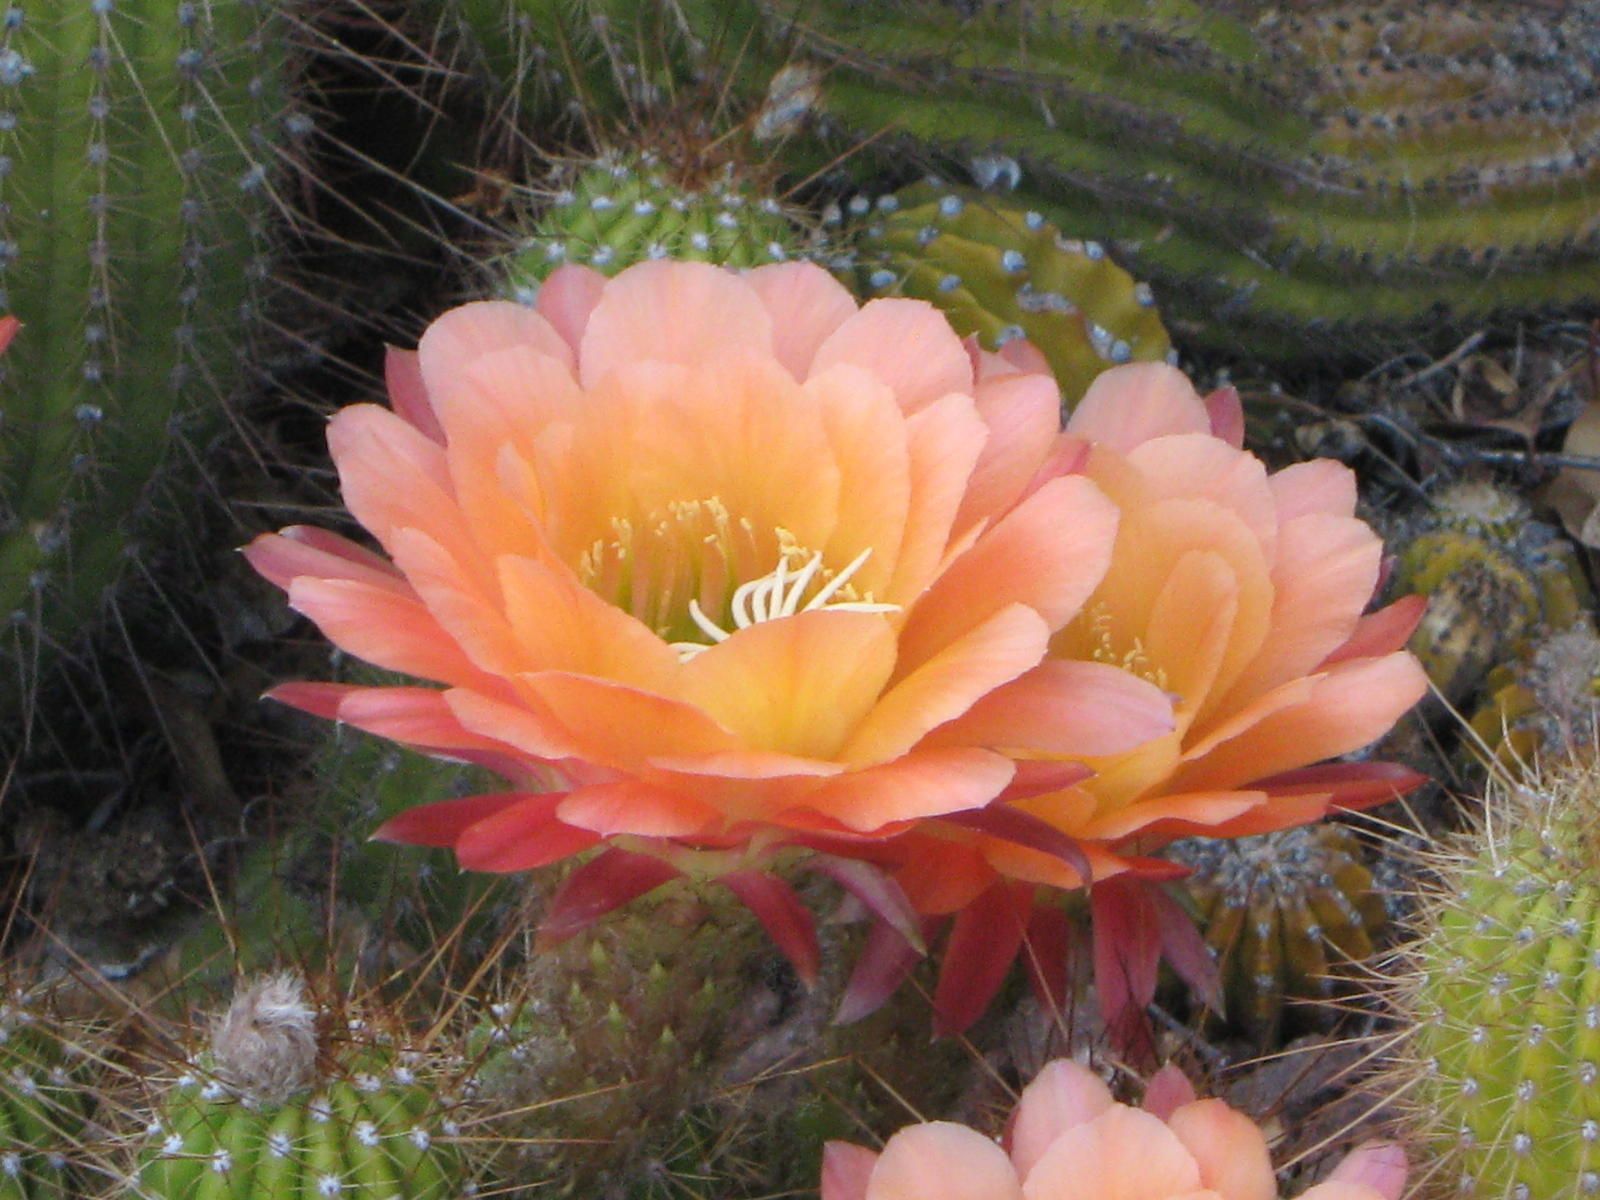 cactus in bloom | desert blooms | Pinterest | Cacti, Flowers and ...